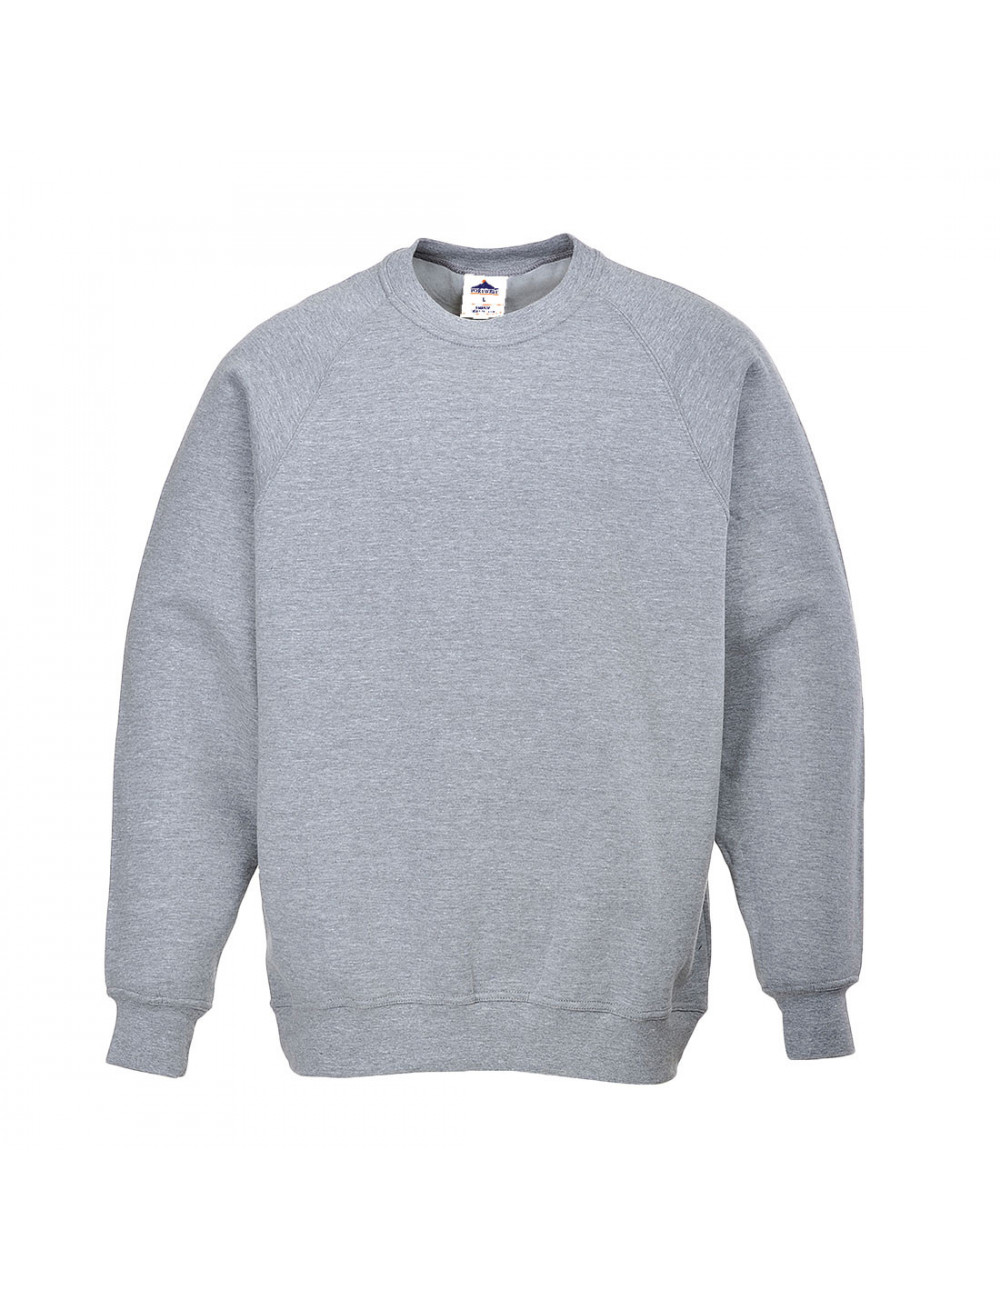 Sweatshirt roma heather gray Portwest